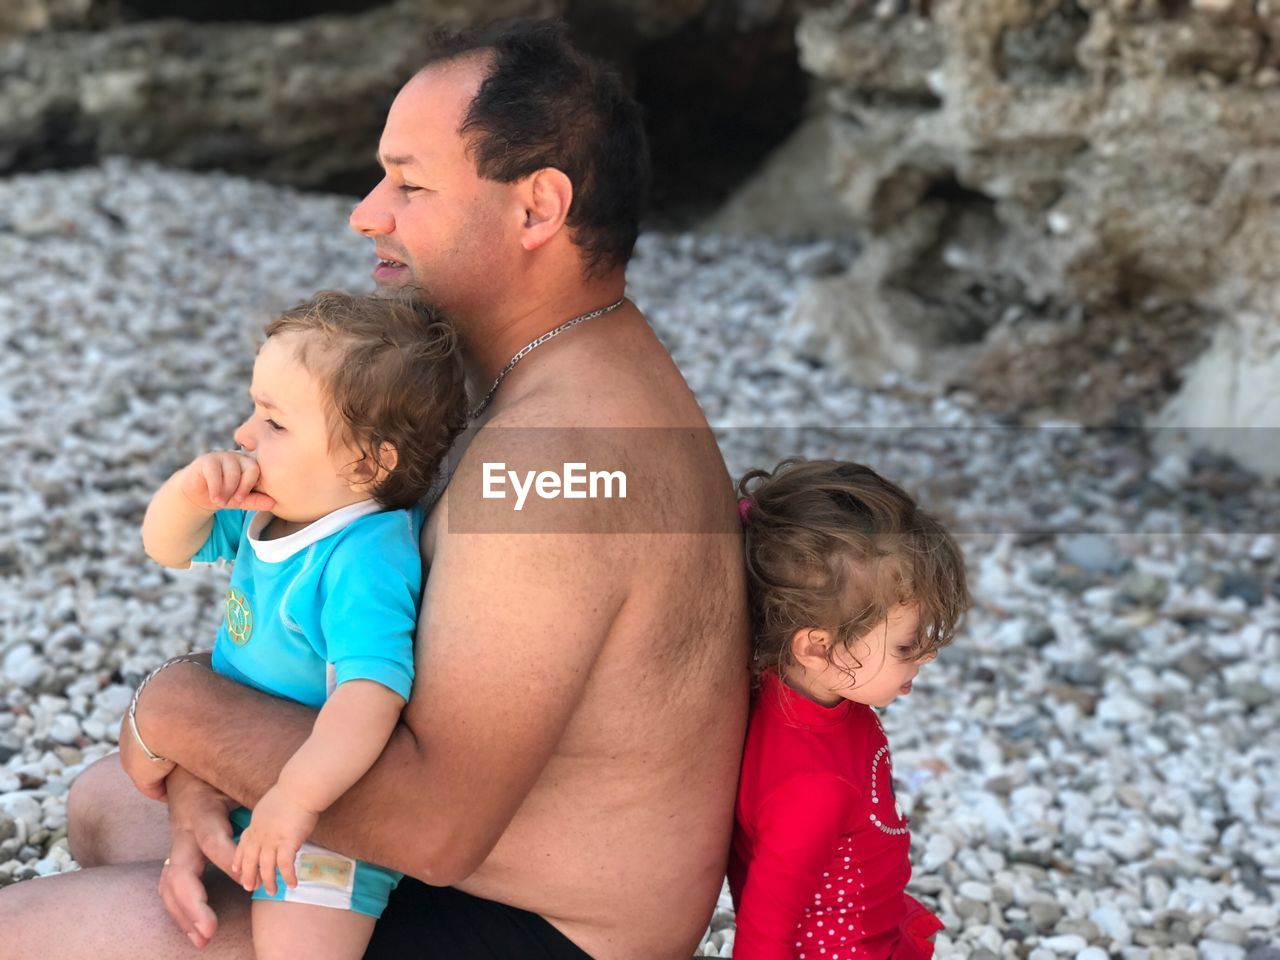 Shirtless man with children sitting at beach